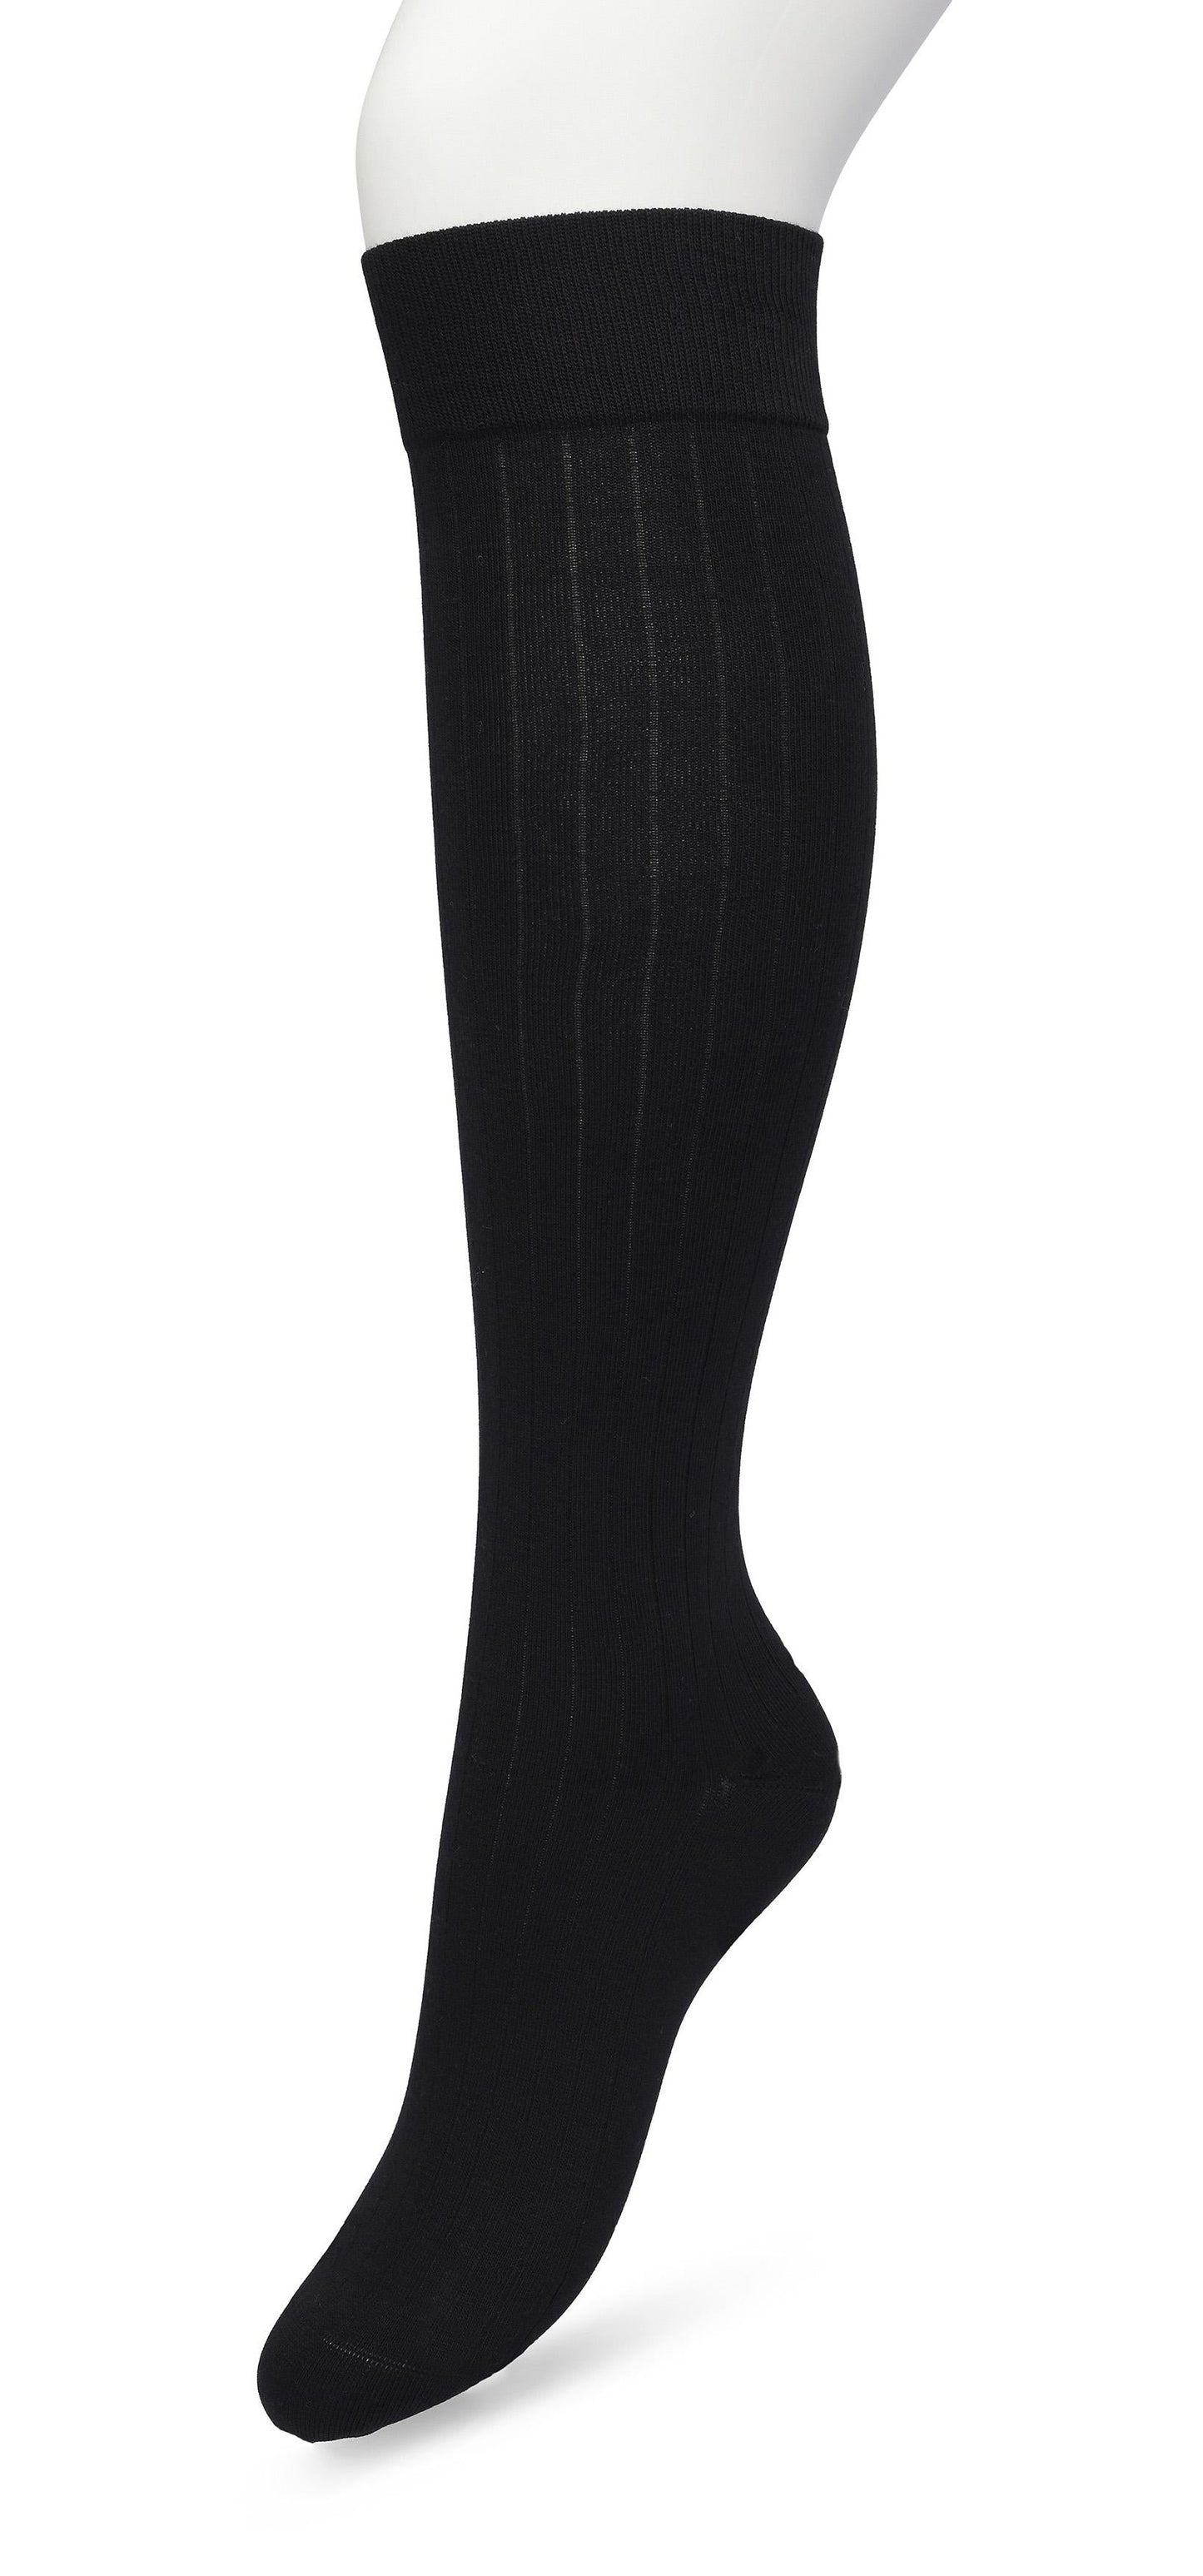 Bonnie Doon Rib Knee High Sock - Black knitted rib knee-high sock with shaped heel, flat toe seam and deep elasticated cuff.